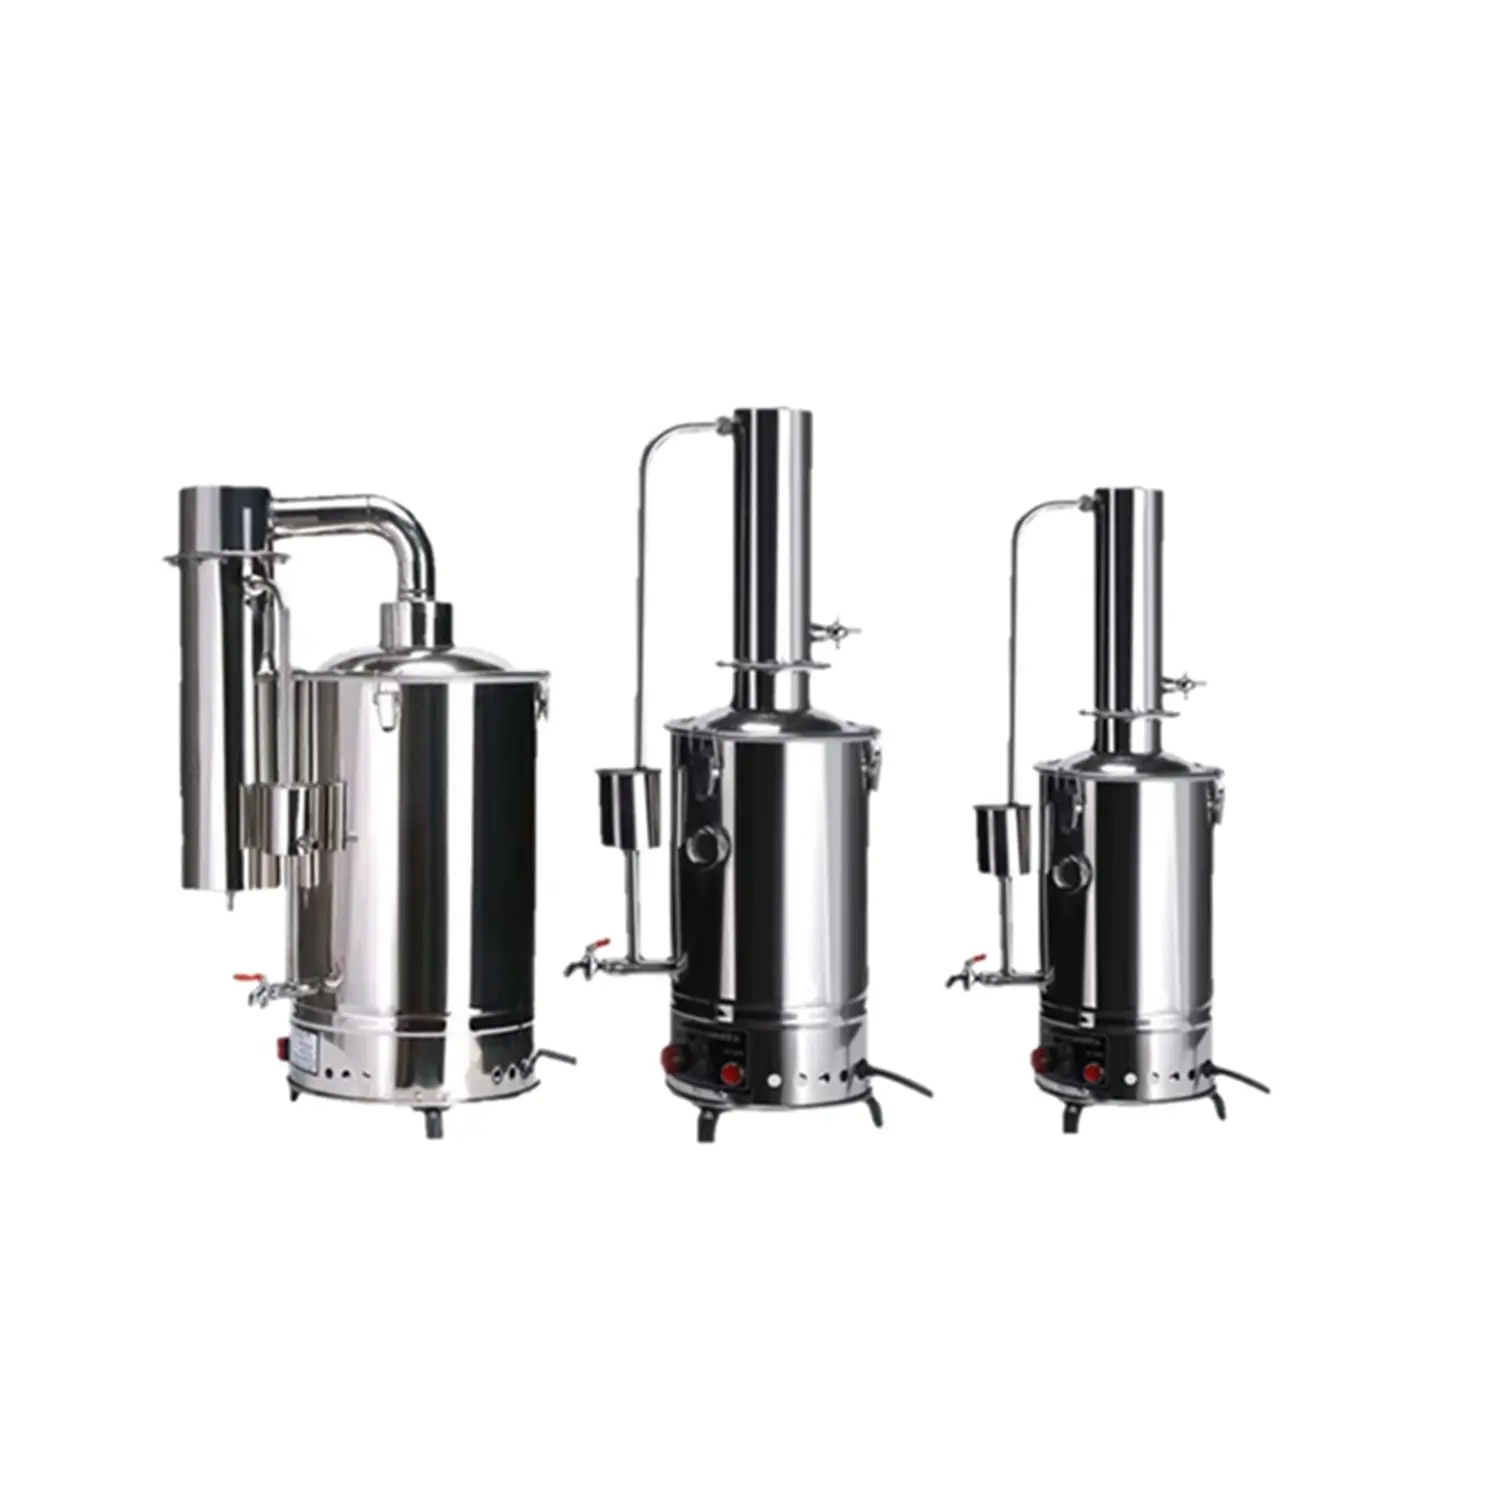 Distilled Water Making Machine 20L Per Hour Water Distiller Stainless Steel For Fragrances Beverage Shops Food Stores